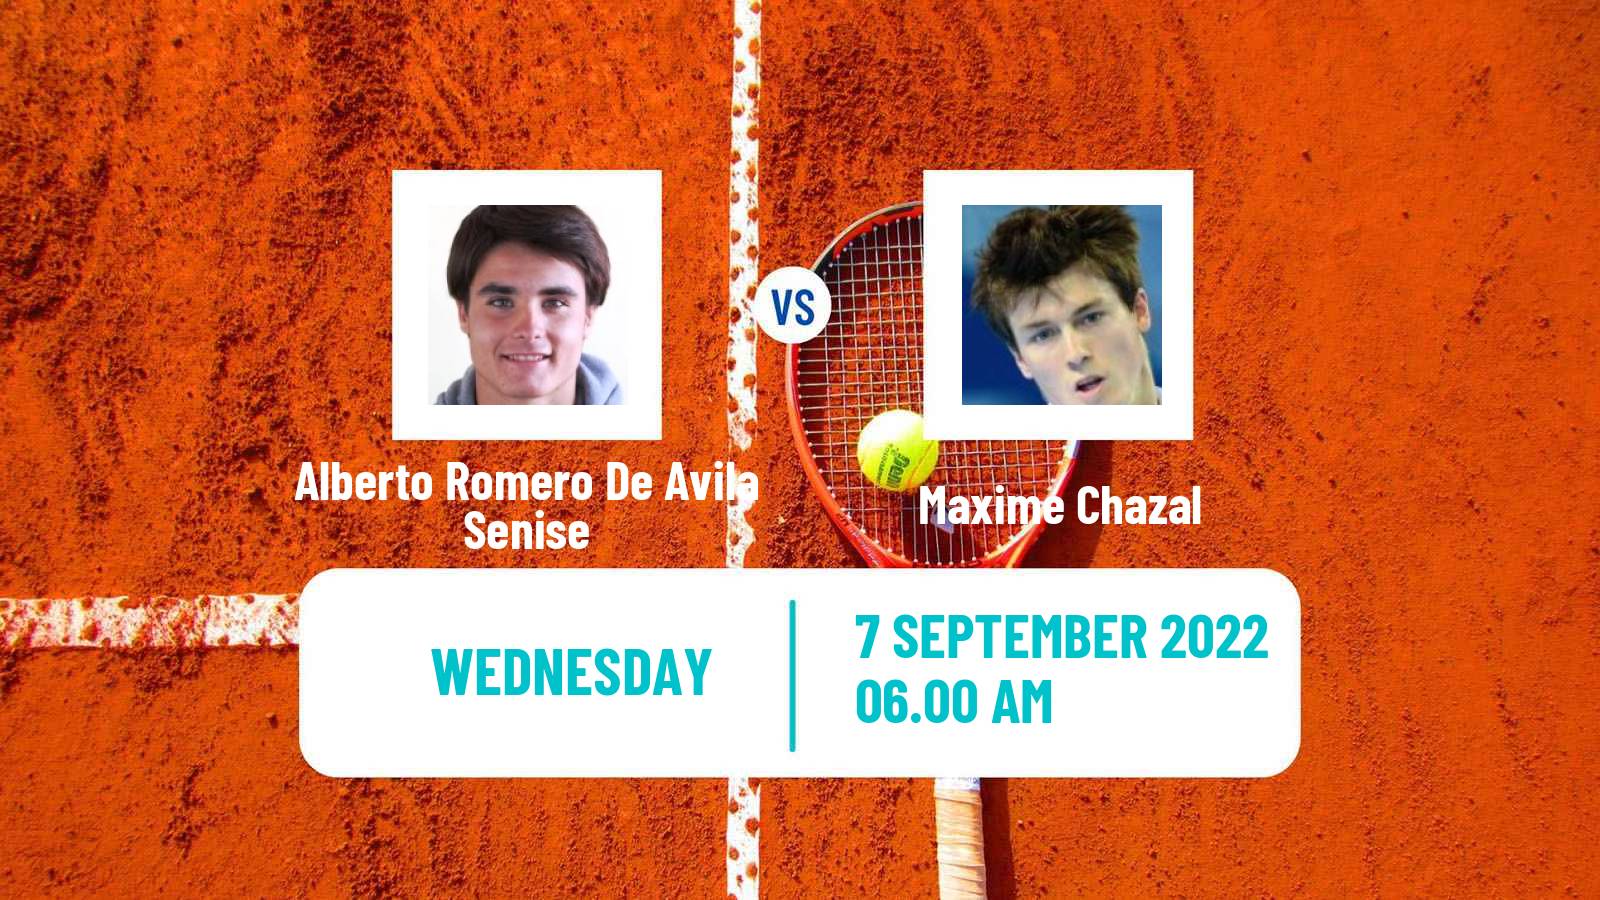 Tennis ITF Tournaments Alberto Romero De Avila Senise - Maxime Chazal